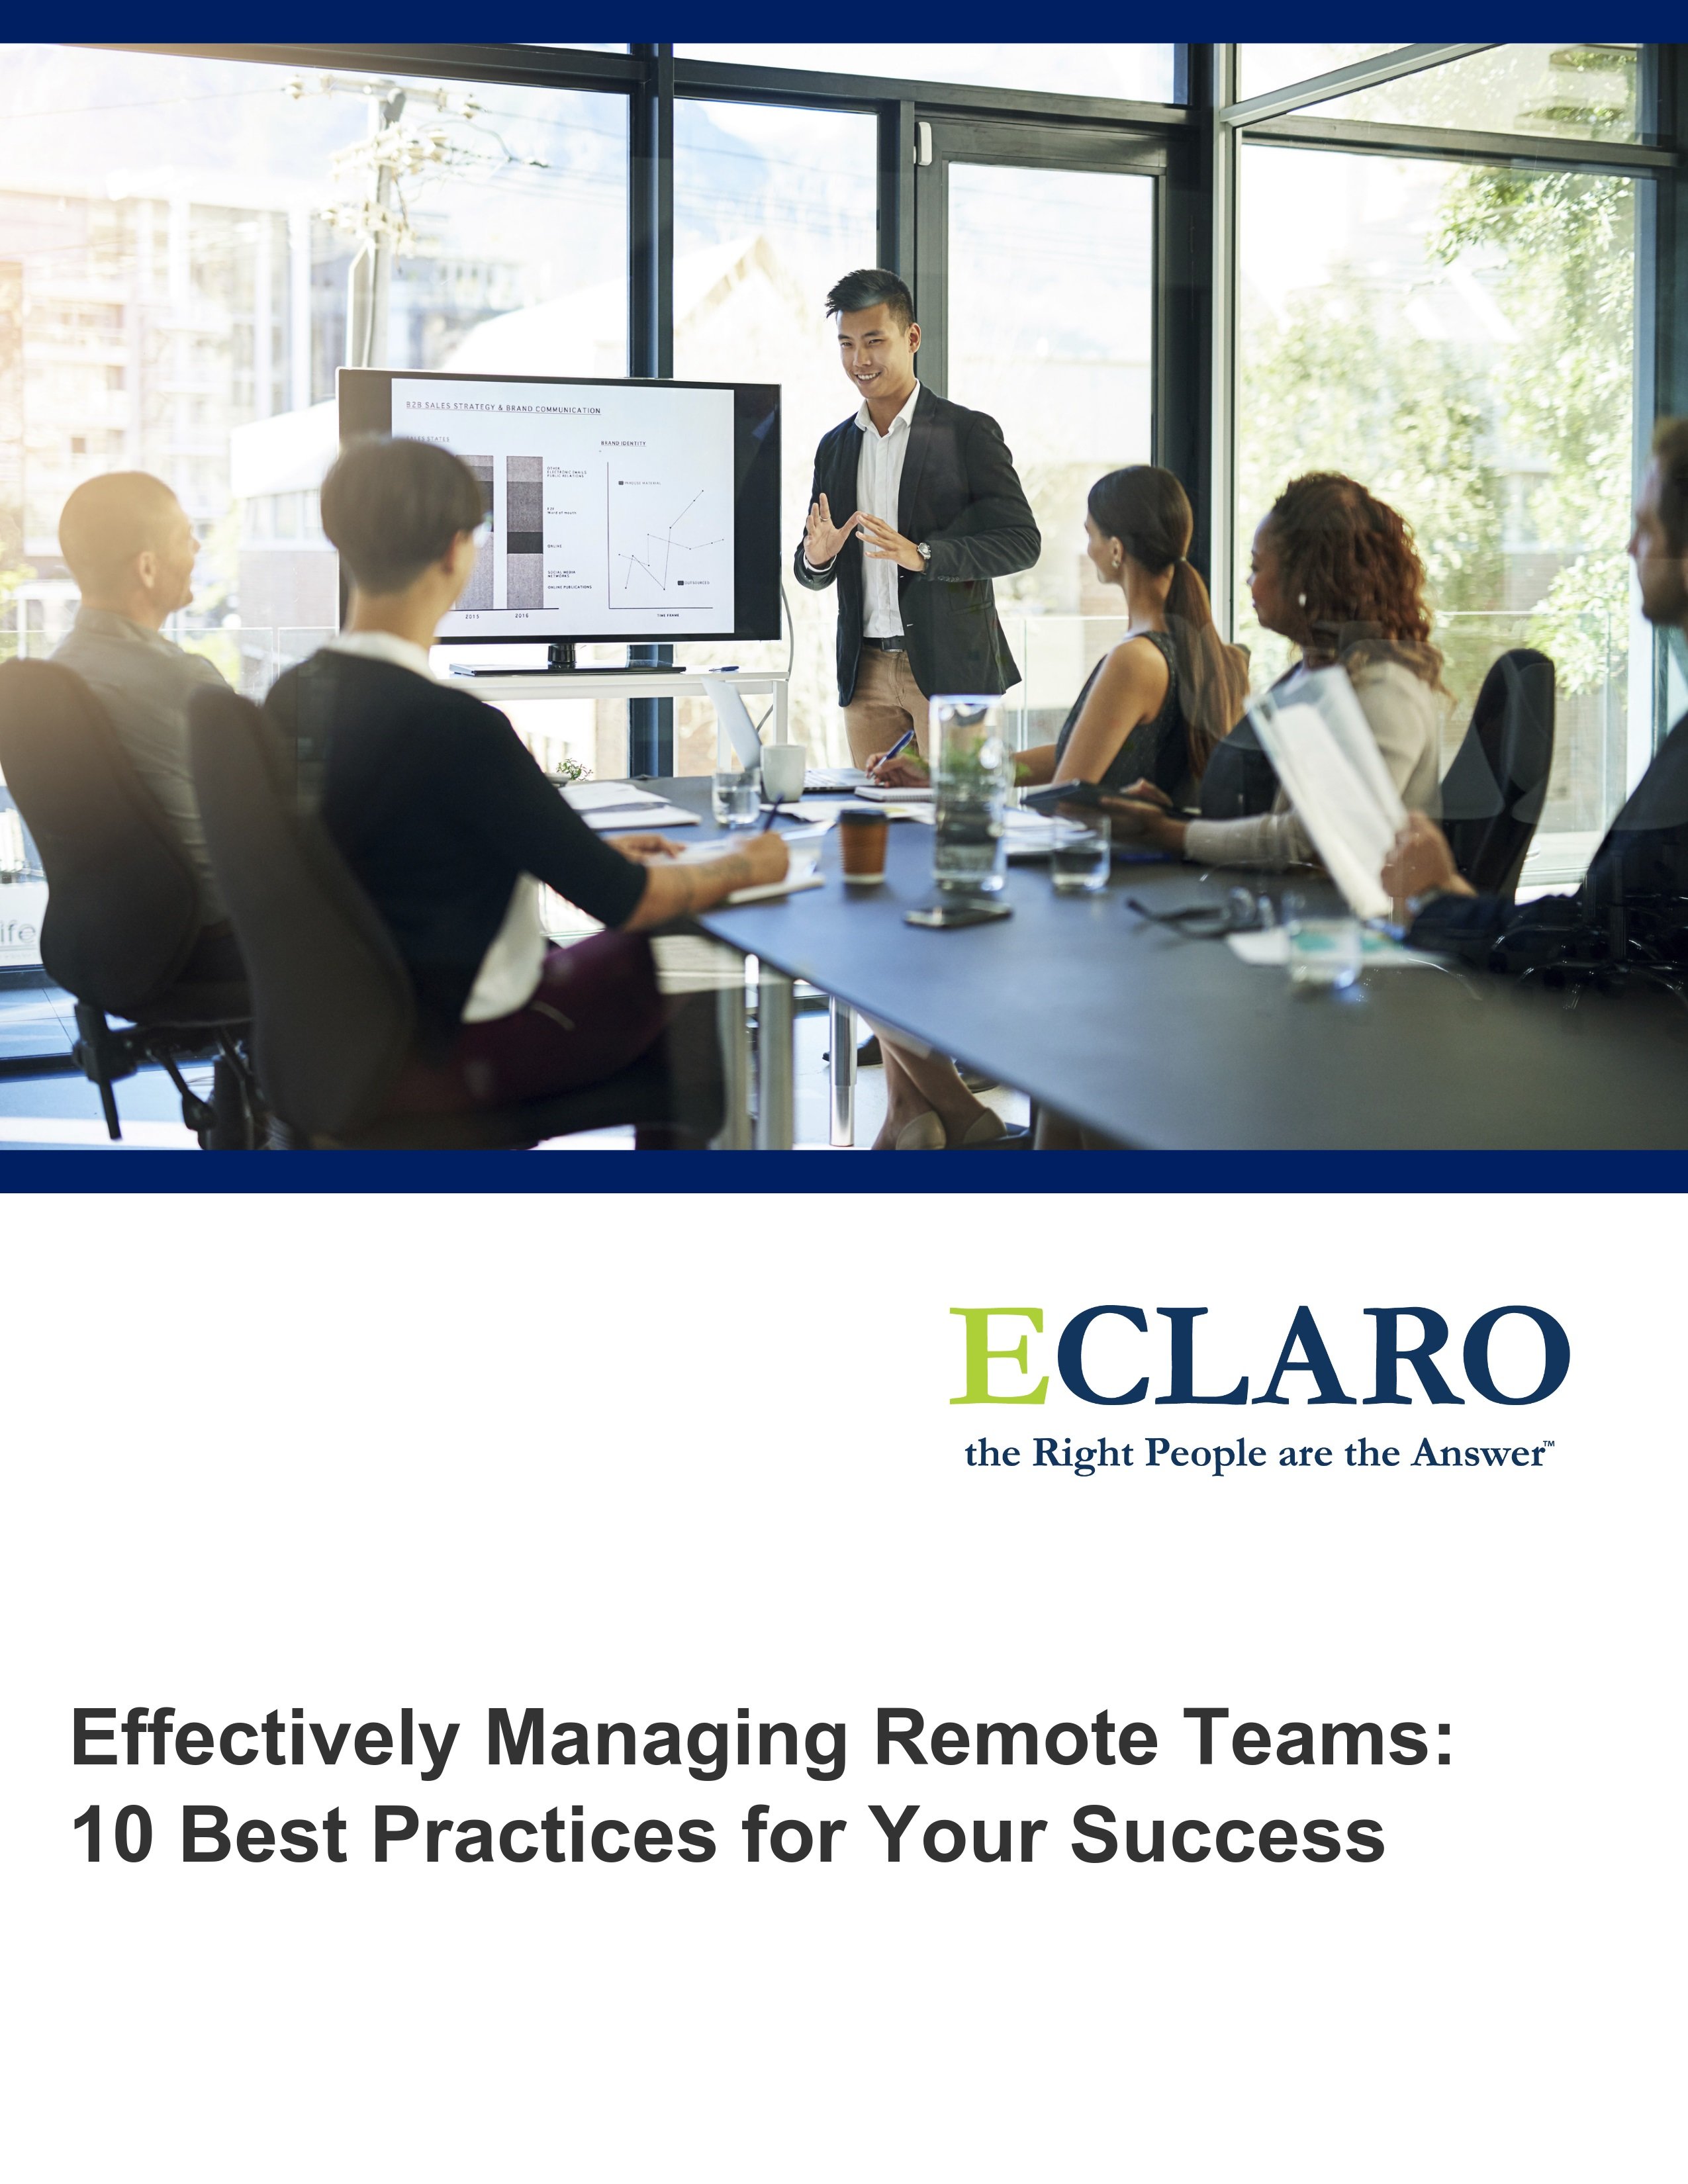 Remote Teams White Paper